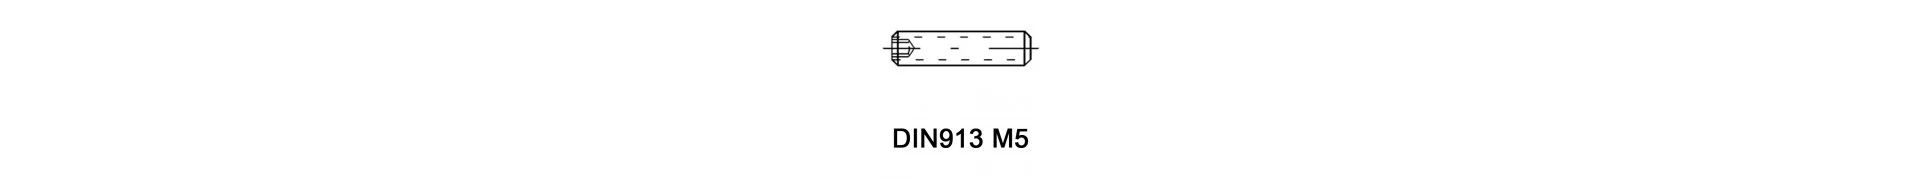 DIN913 M5